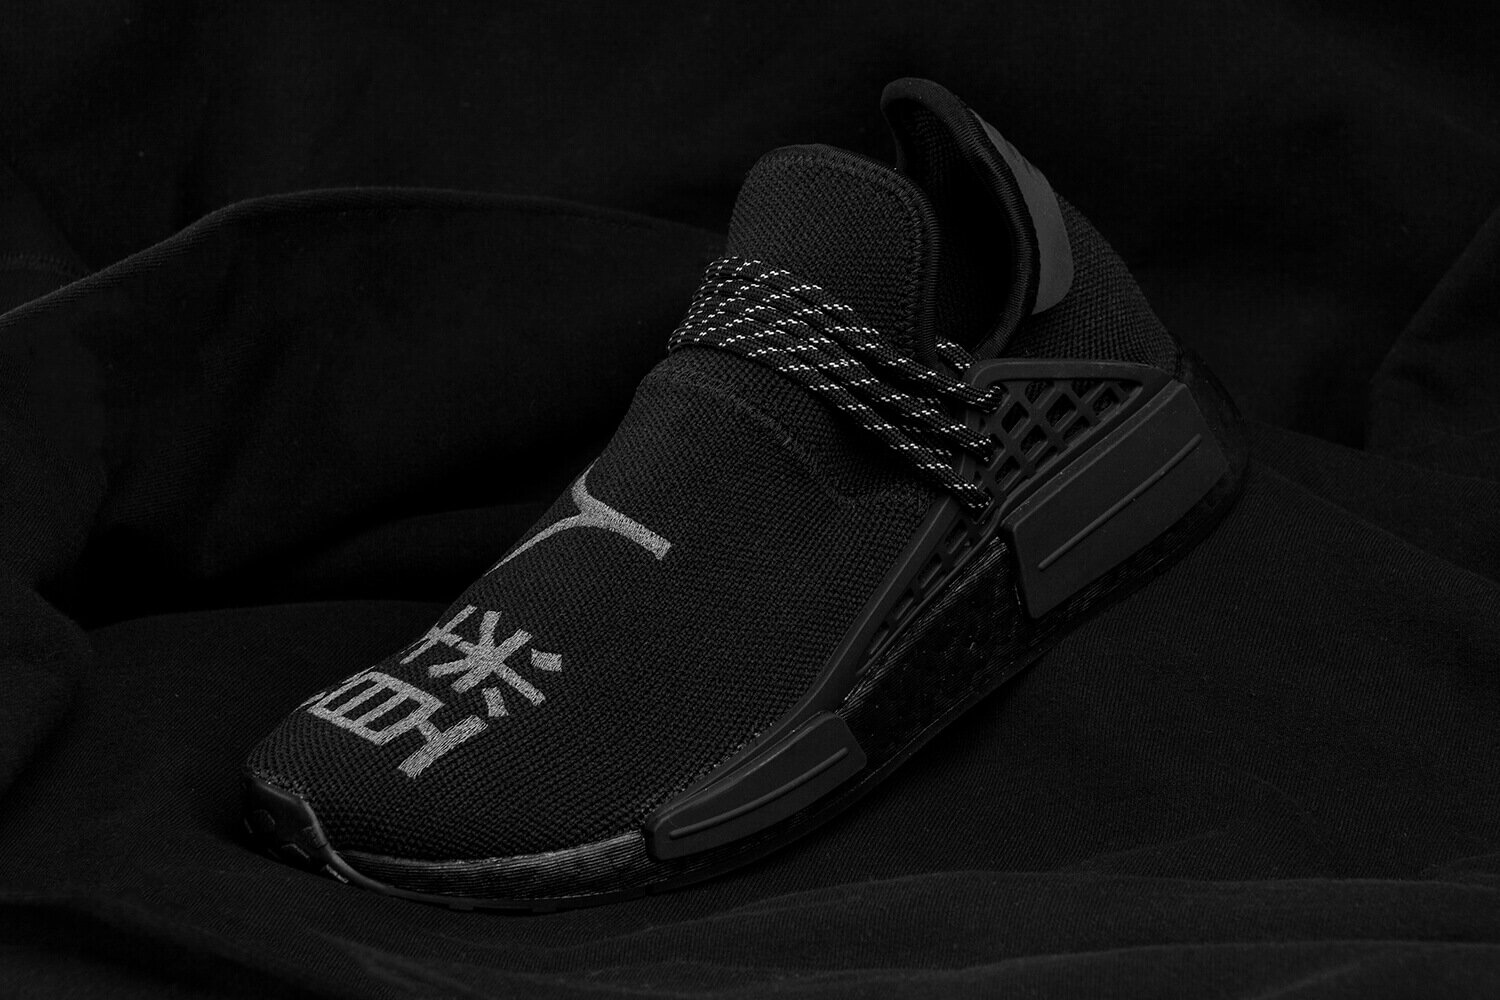 Adidas PHARRELL Hu NMD Core Black REVIEW 